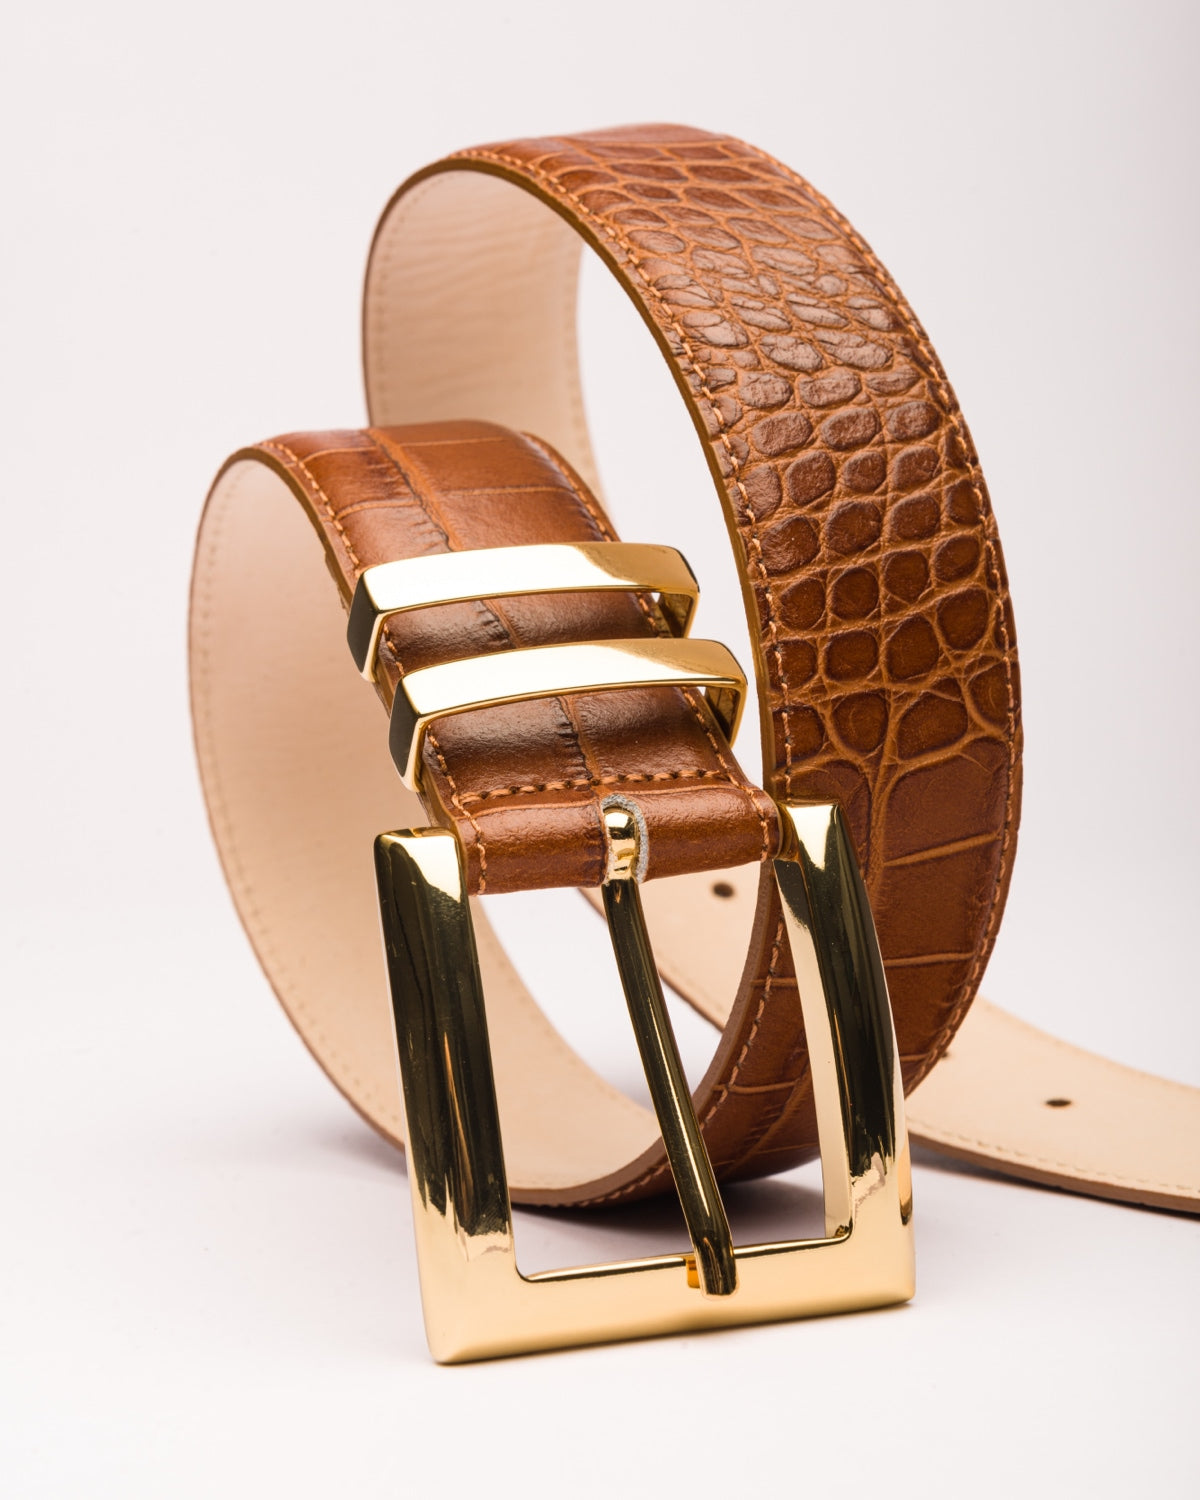 Ida croc print leather belt